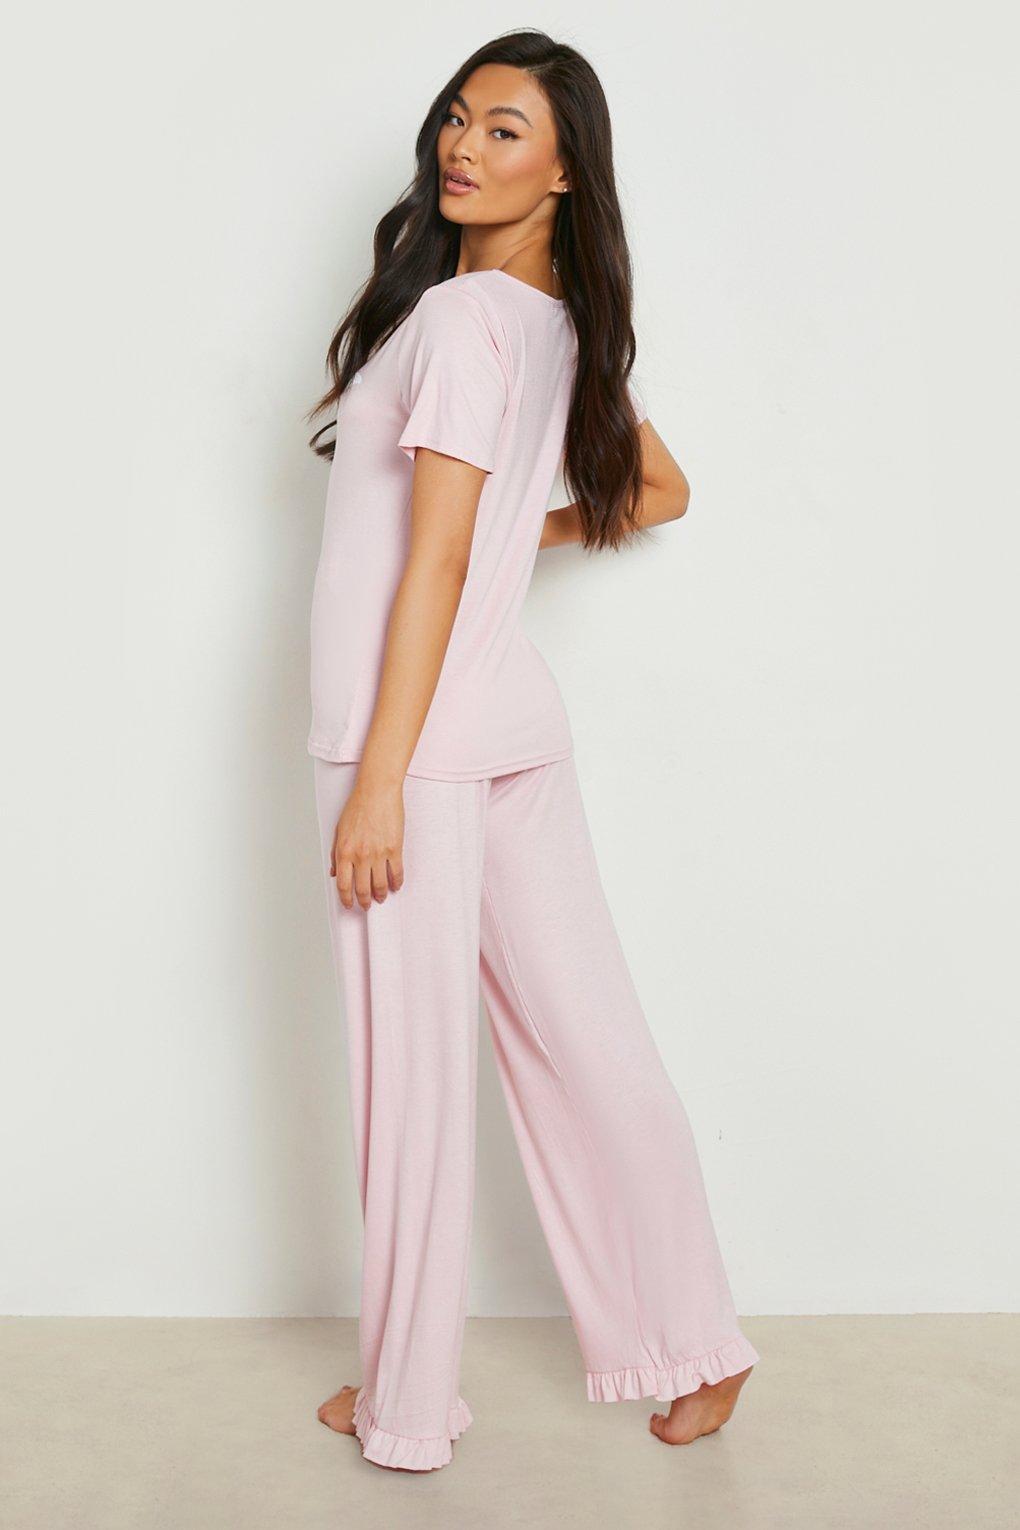 New Womans Viscose 2 Piece Short Sleeve Pyjama Set Ladies Slogan Loungewear Gift